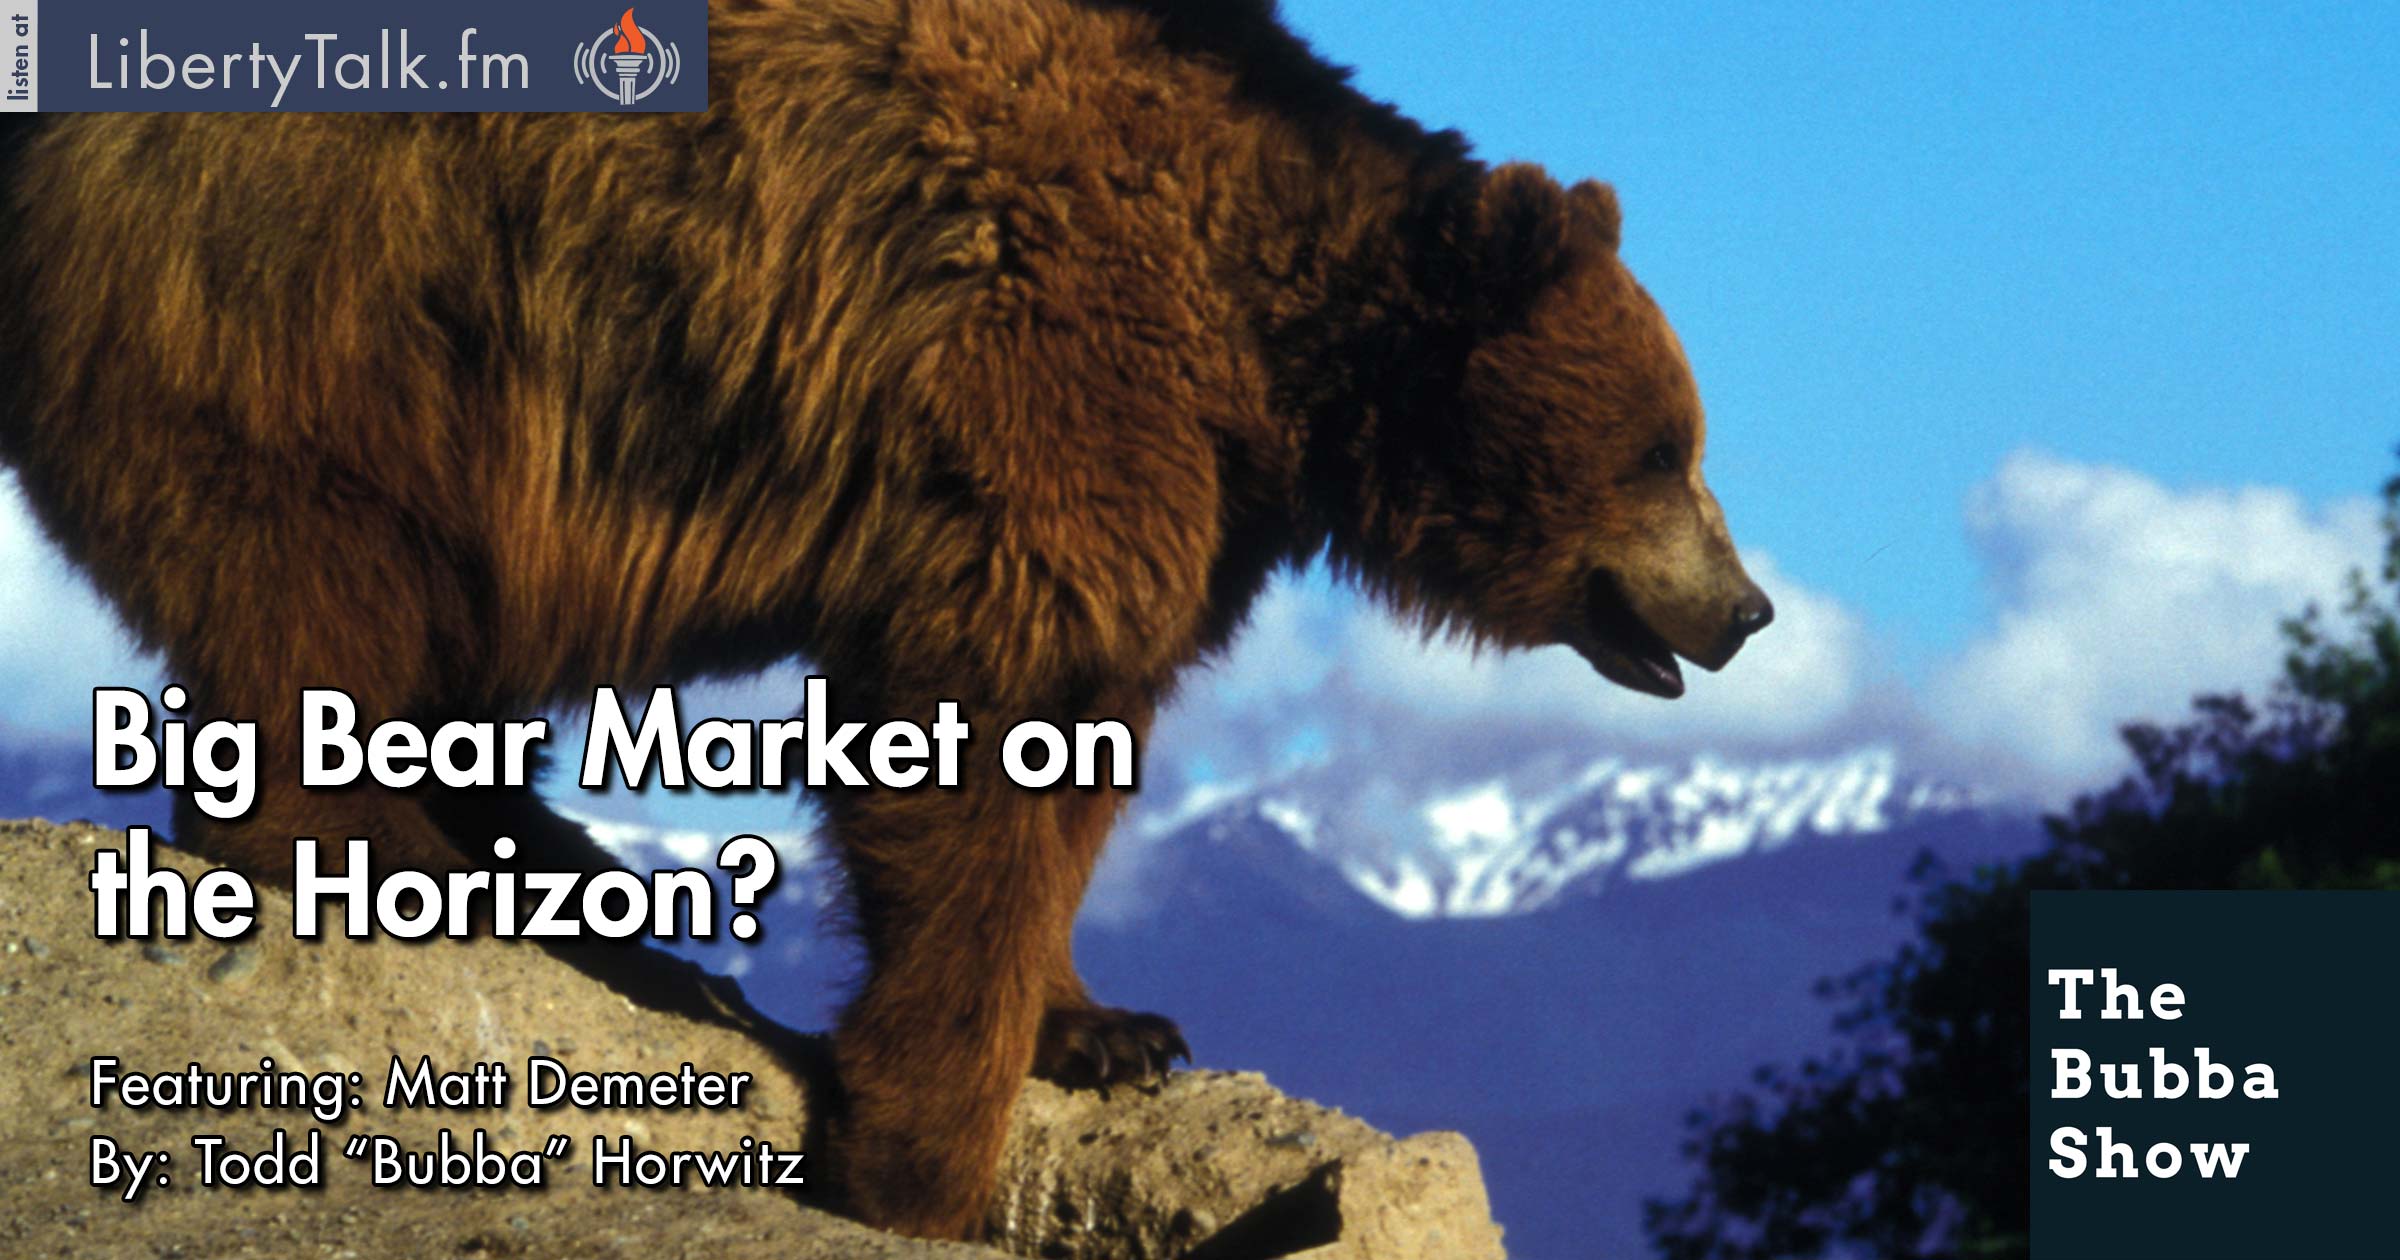  Big Bear Market on the Horizon? The Bubba Show